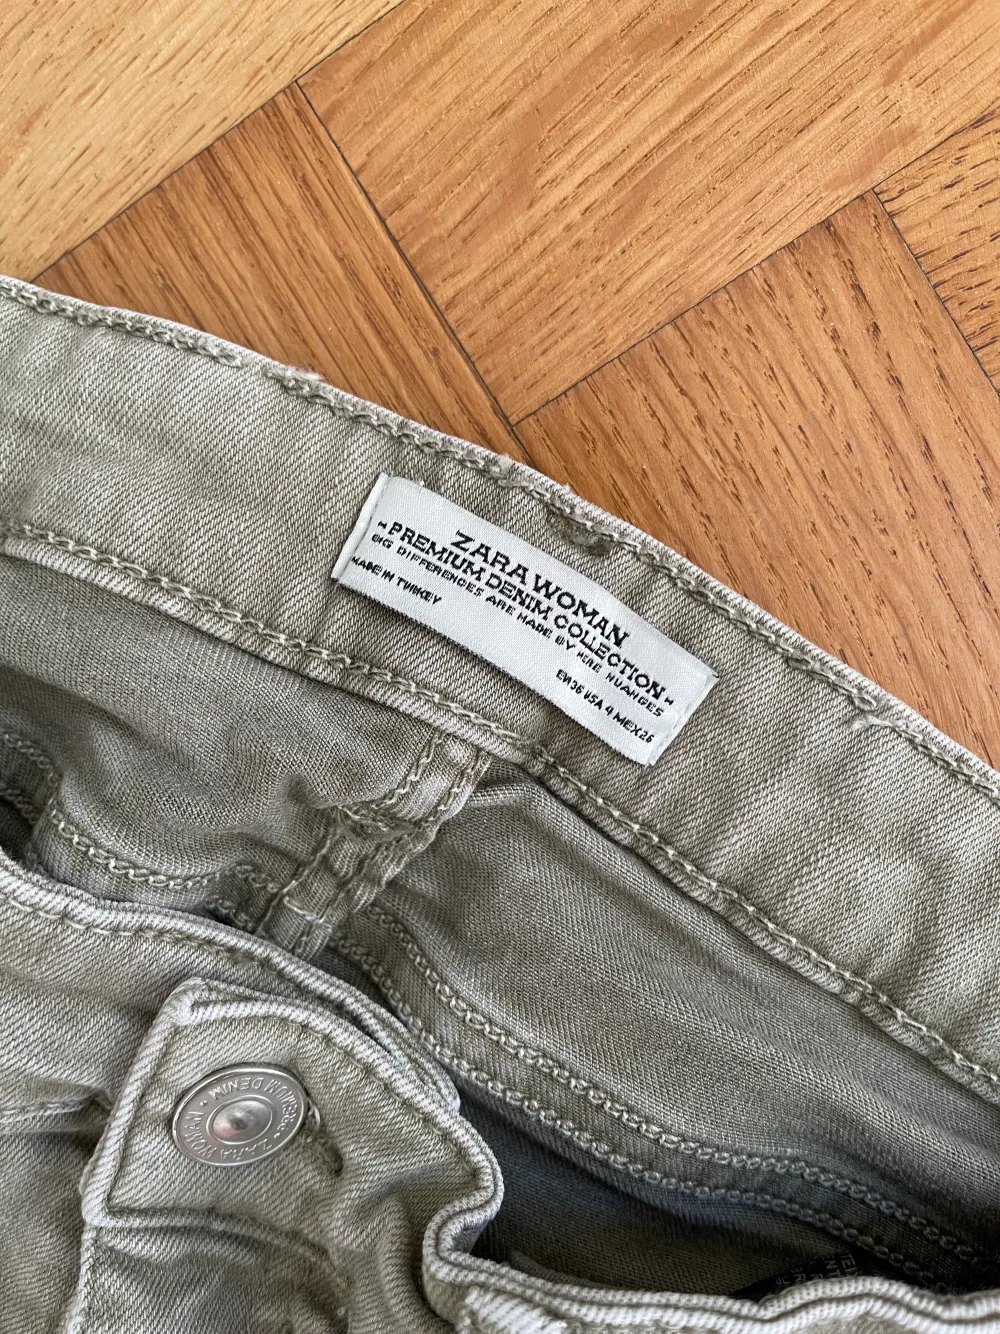 Medium rise, skinny light green/ khaki jeans from Zara premium denim collection . Jeans & Byxor.